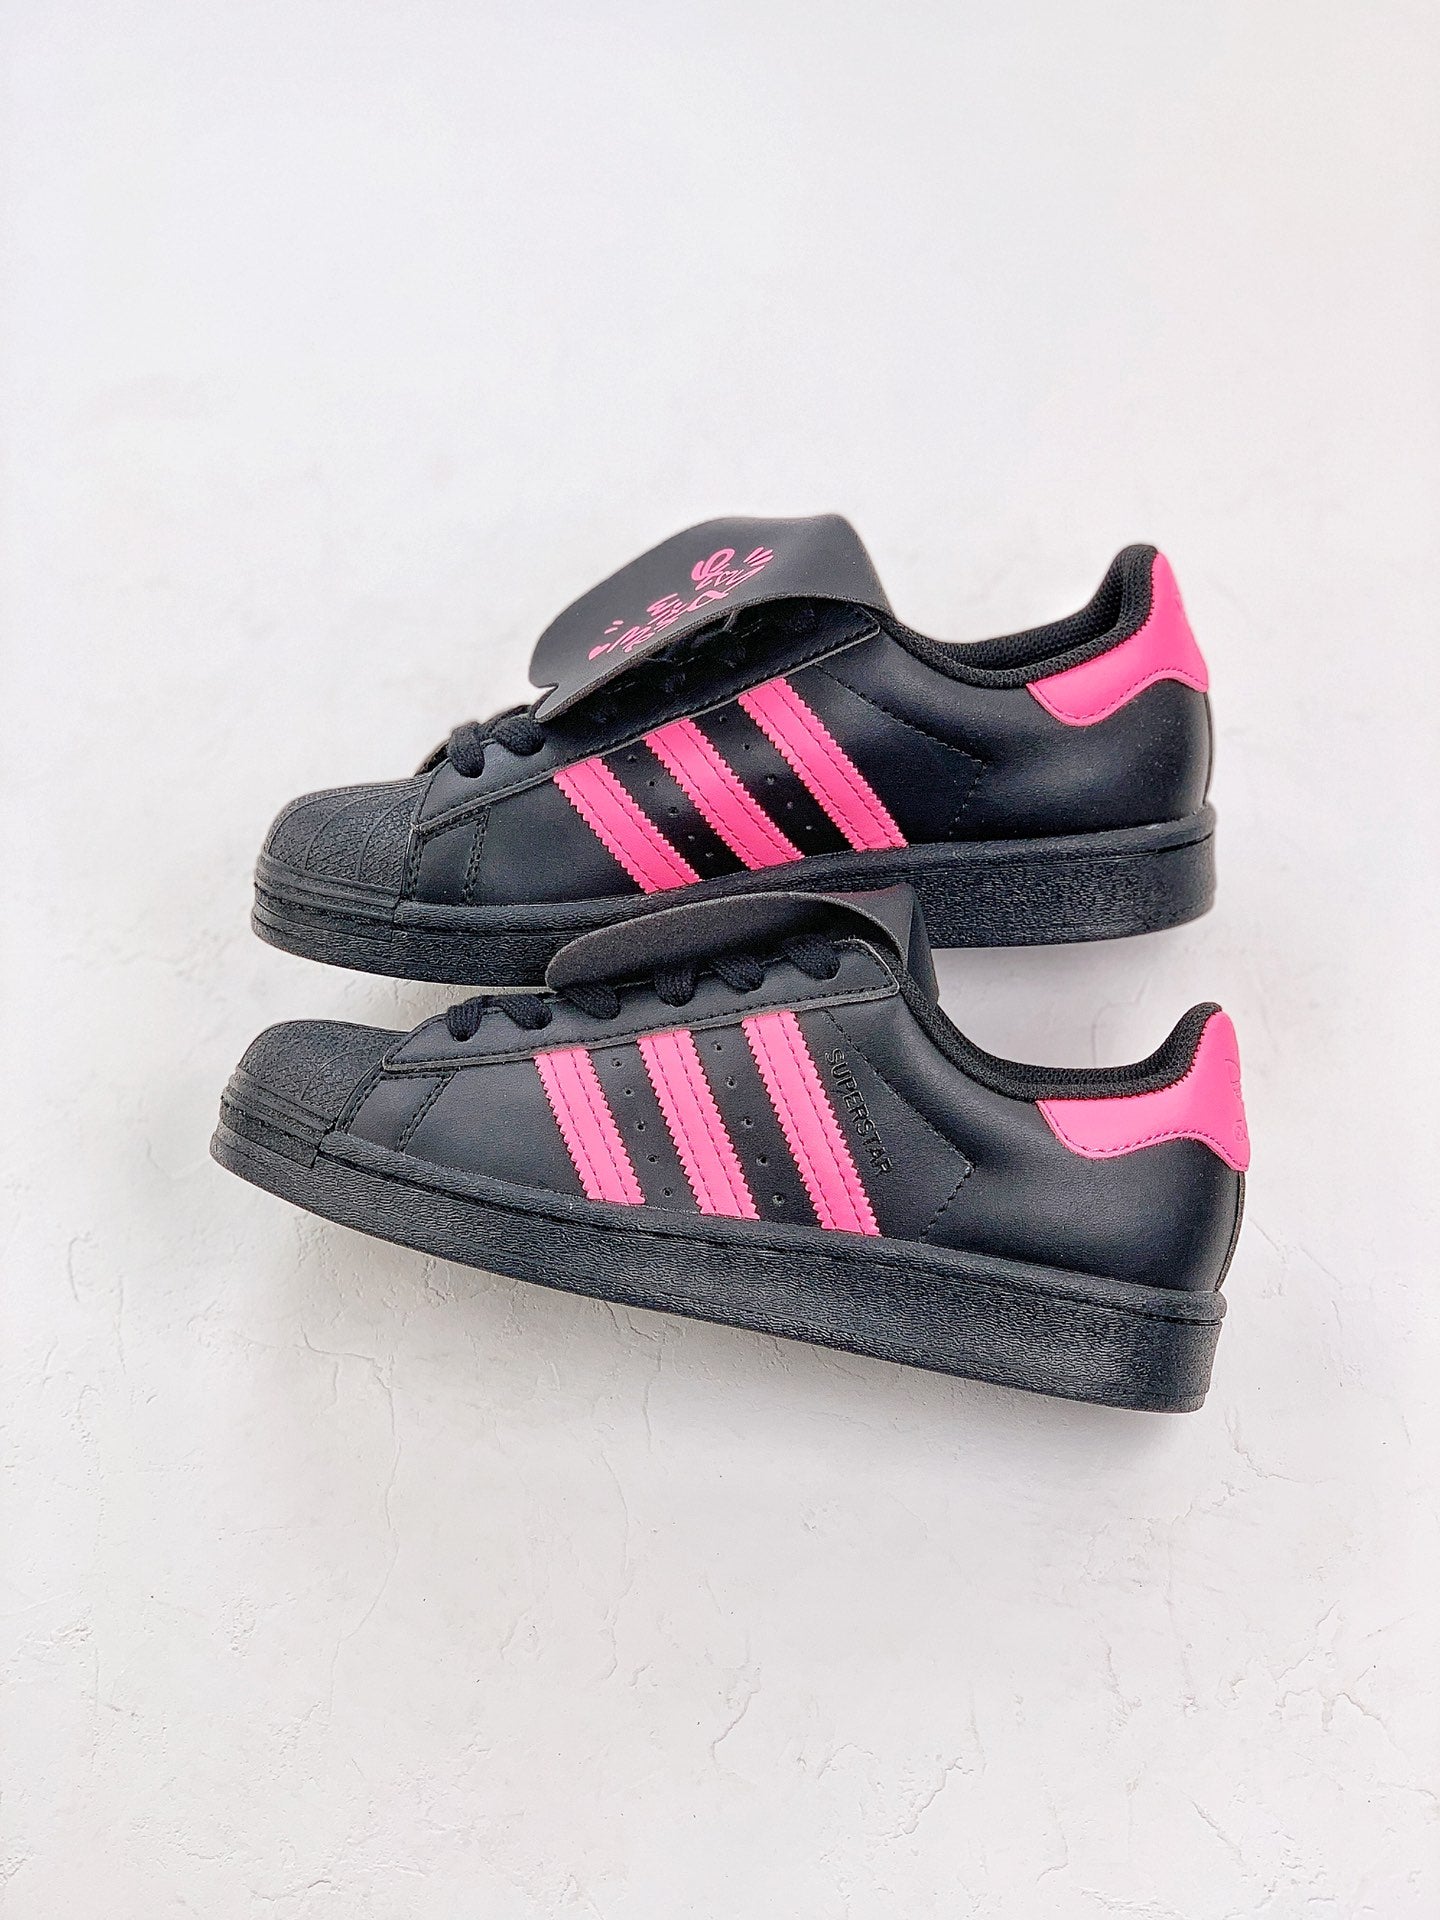 Adidas superstar black pink